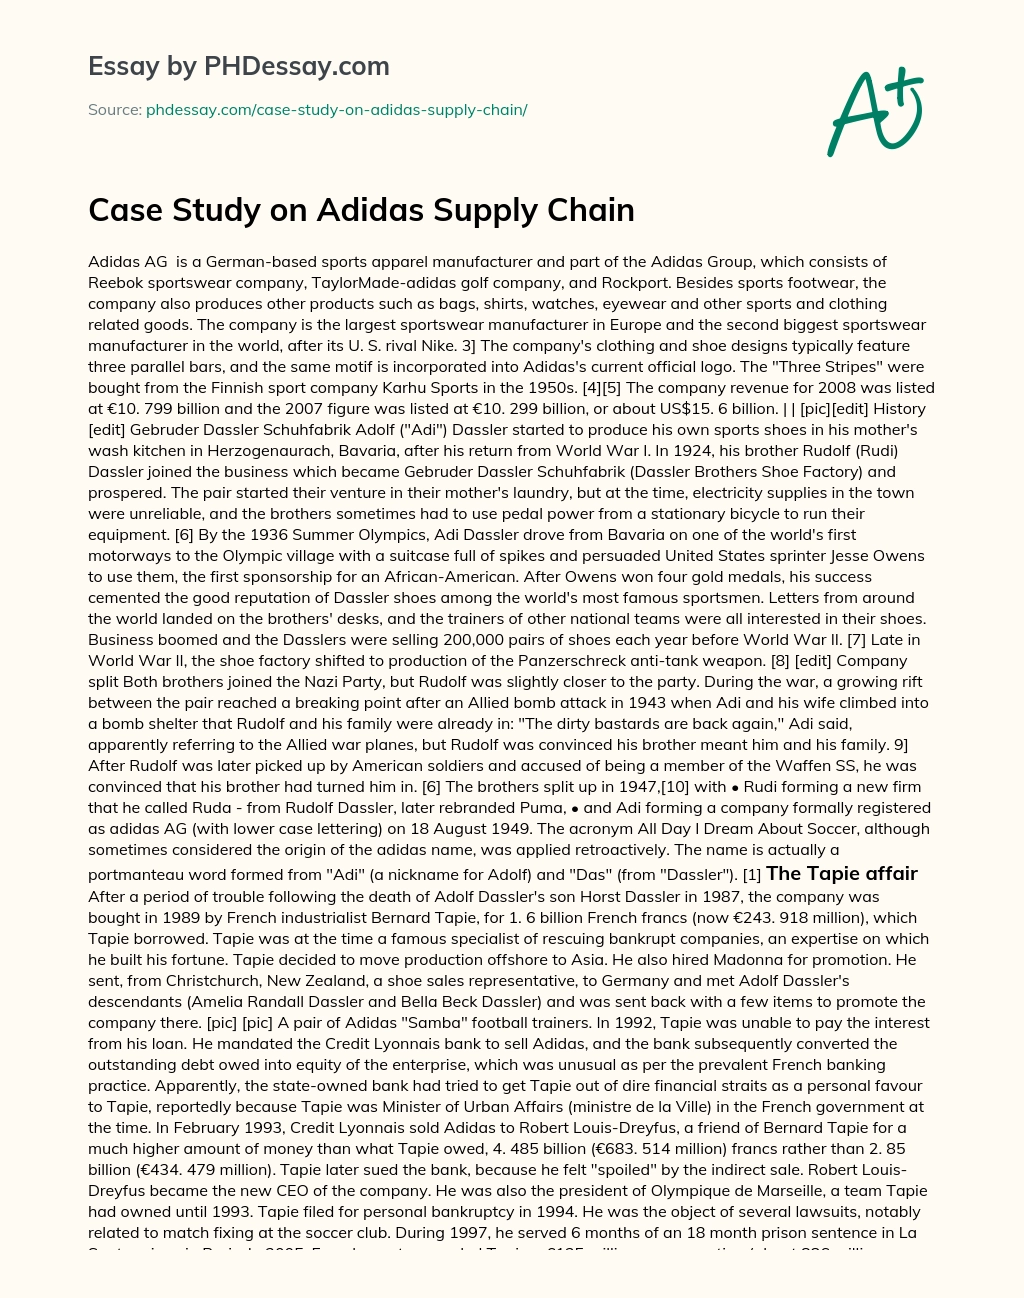 Case Study on Adidas Supply Chain essay